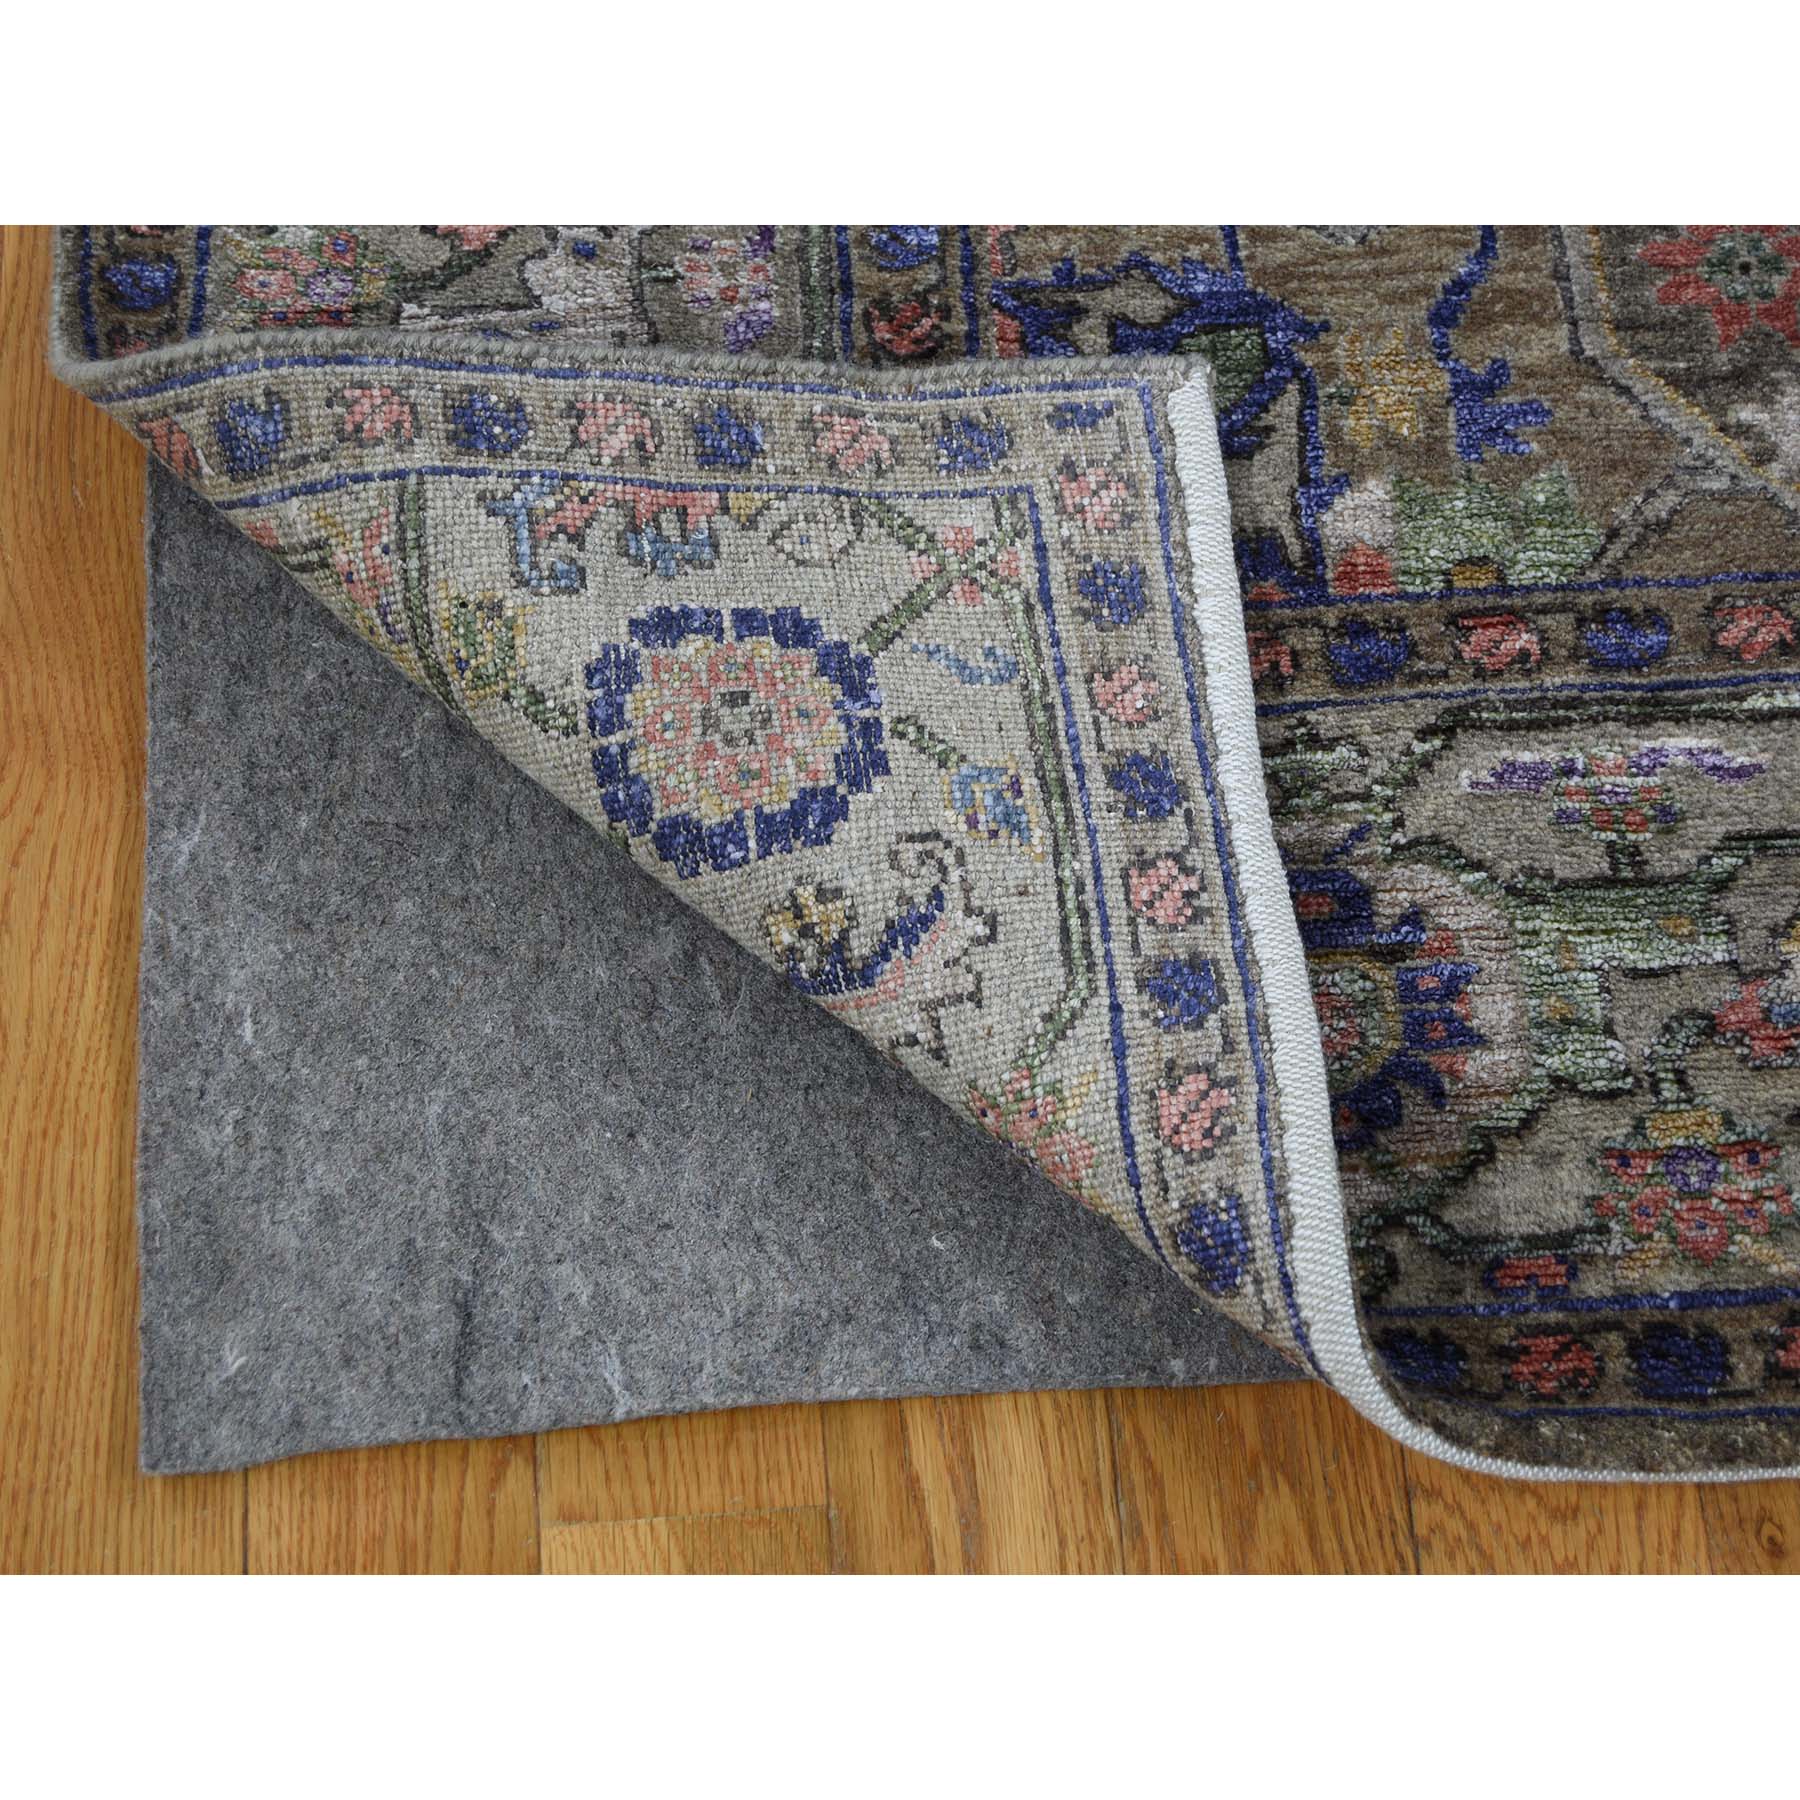 6'x9' Heriz Design Wool and Silk Hand Woven Oriental Rug 